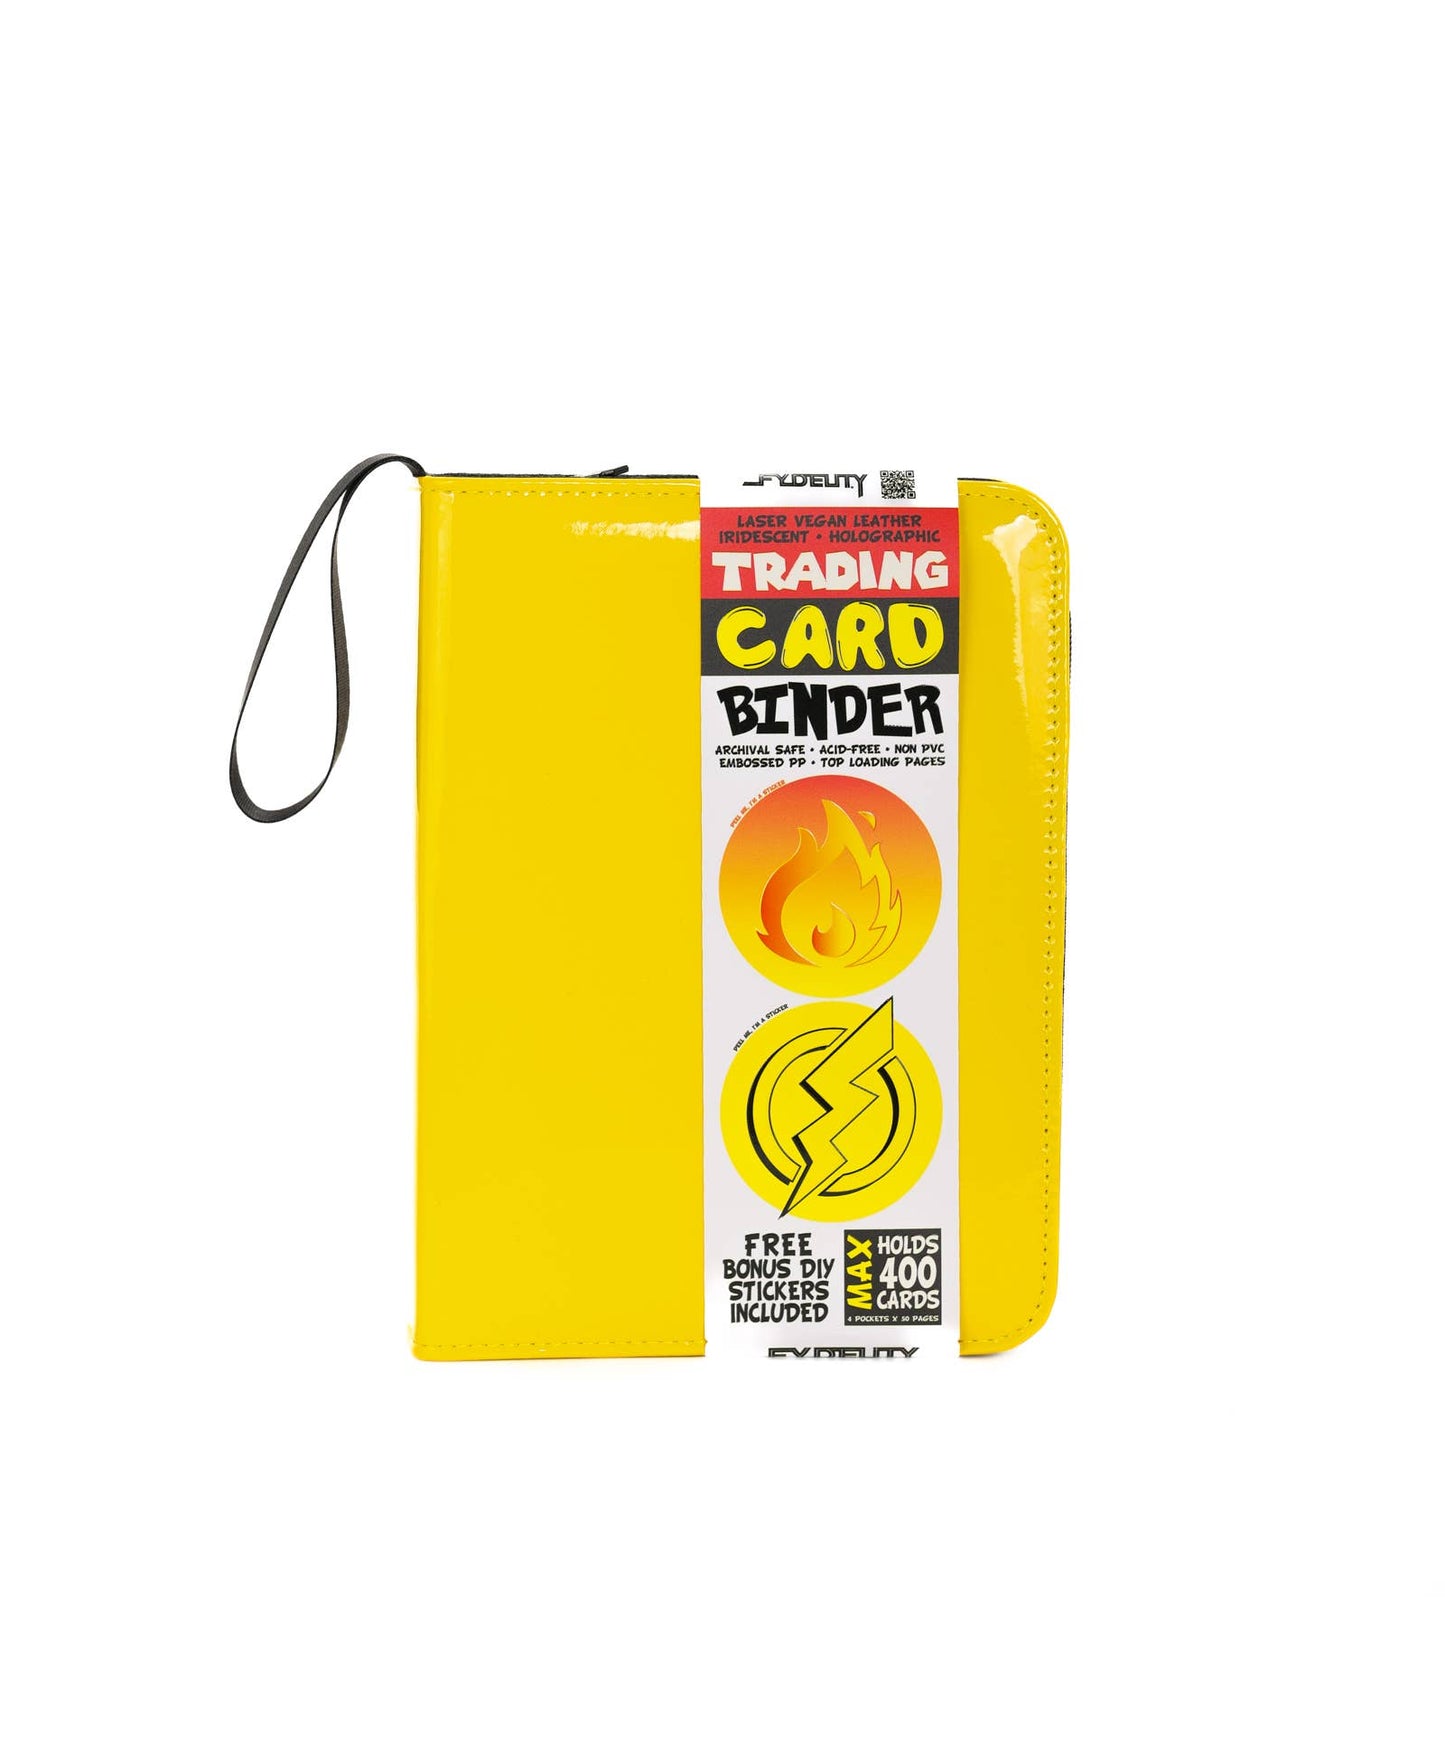 Trading Card Binder - Patent Yellow